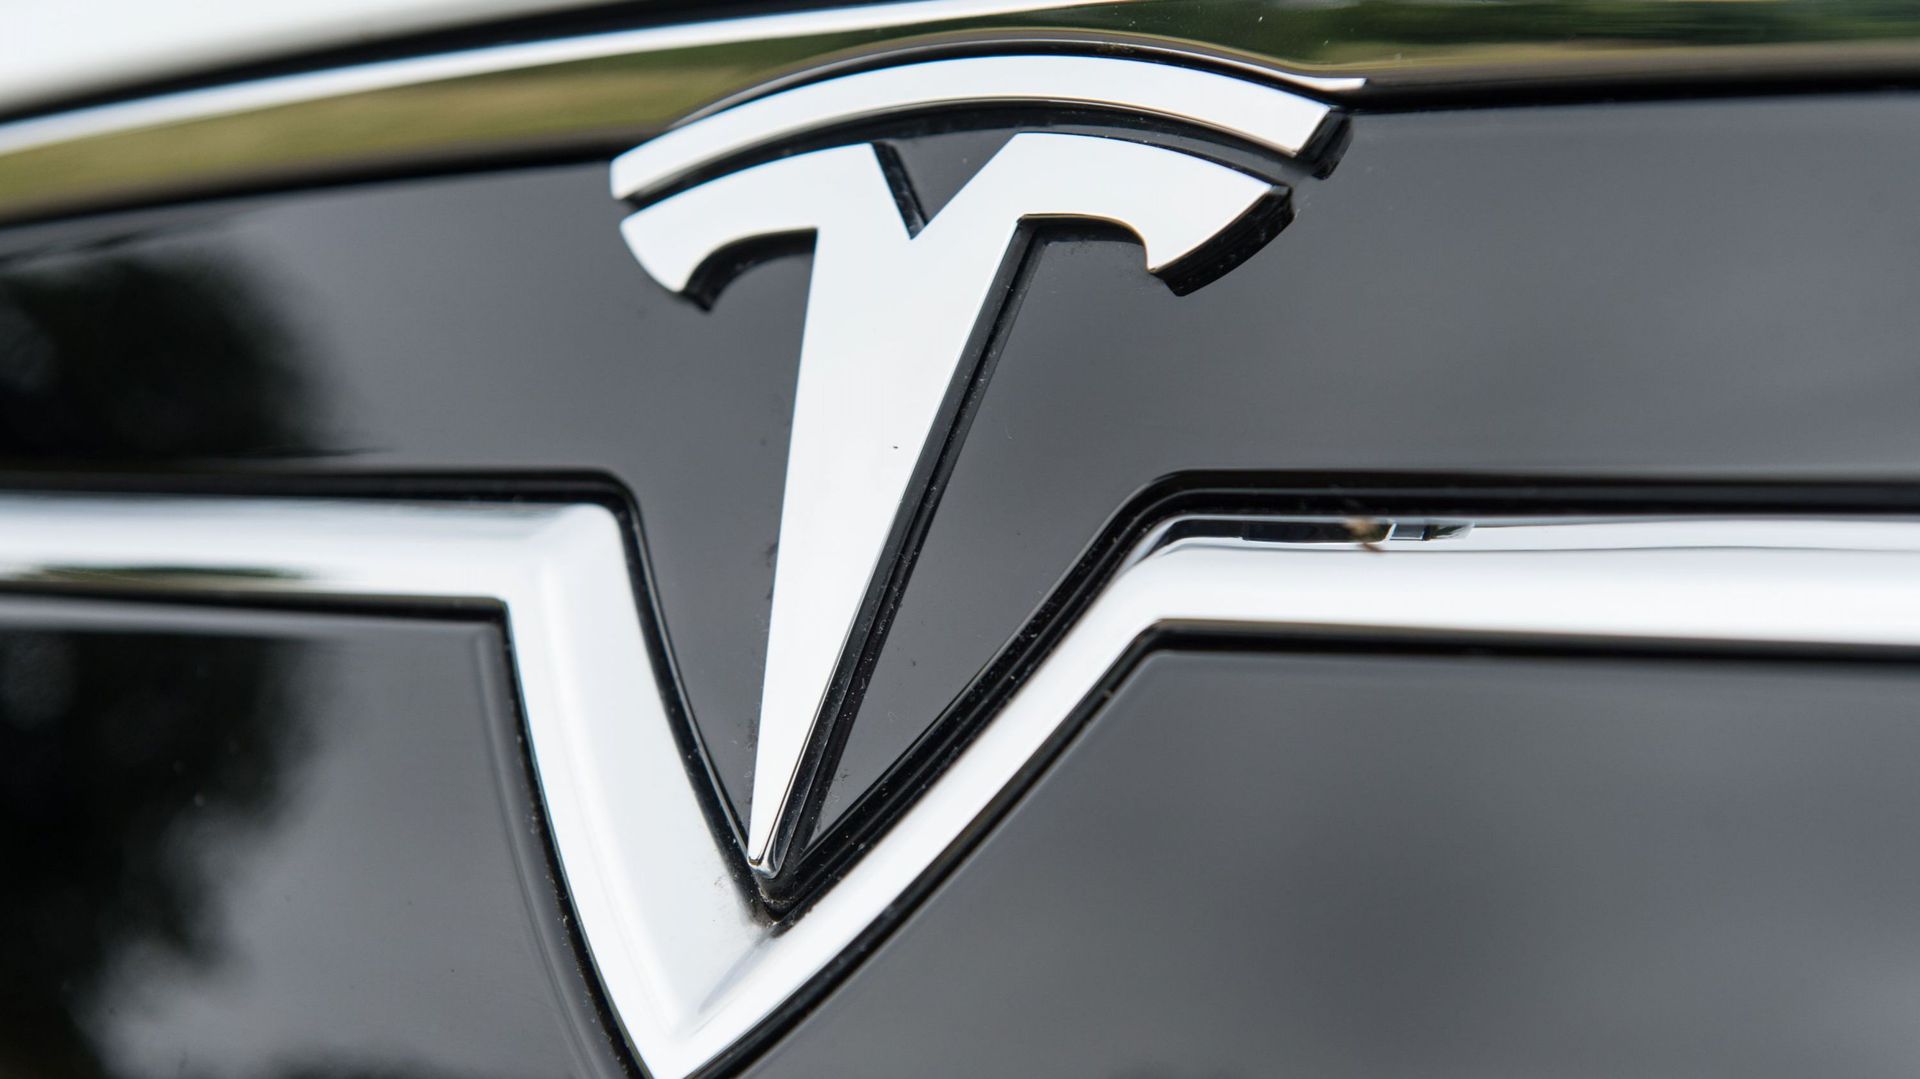 Electric vehicle maker Tesla